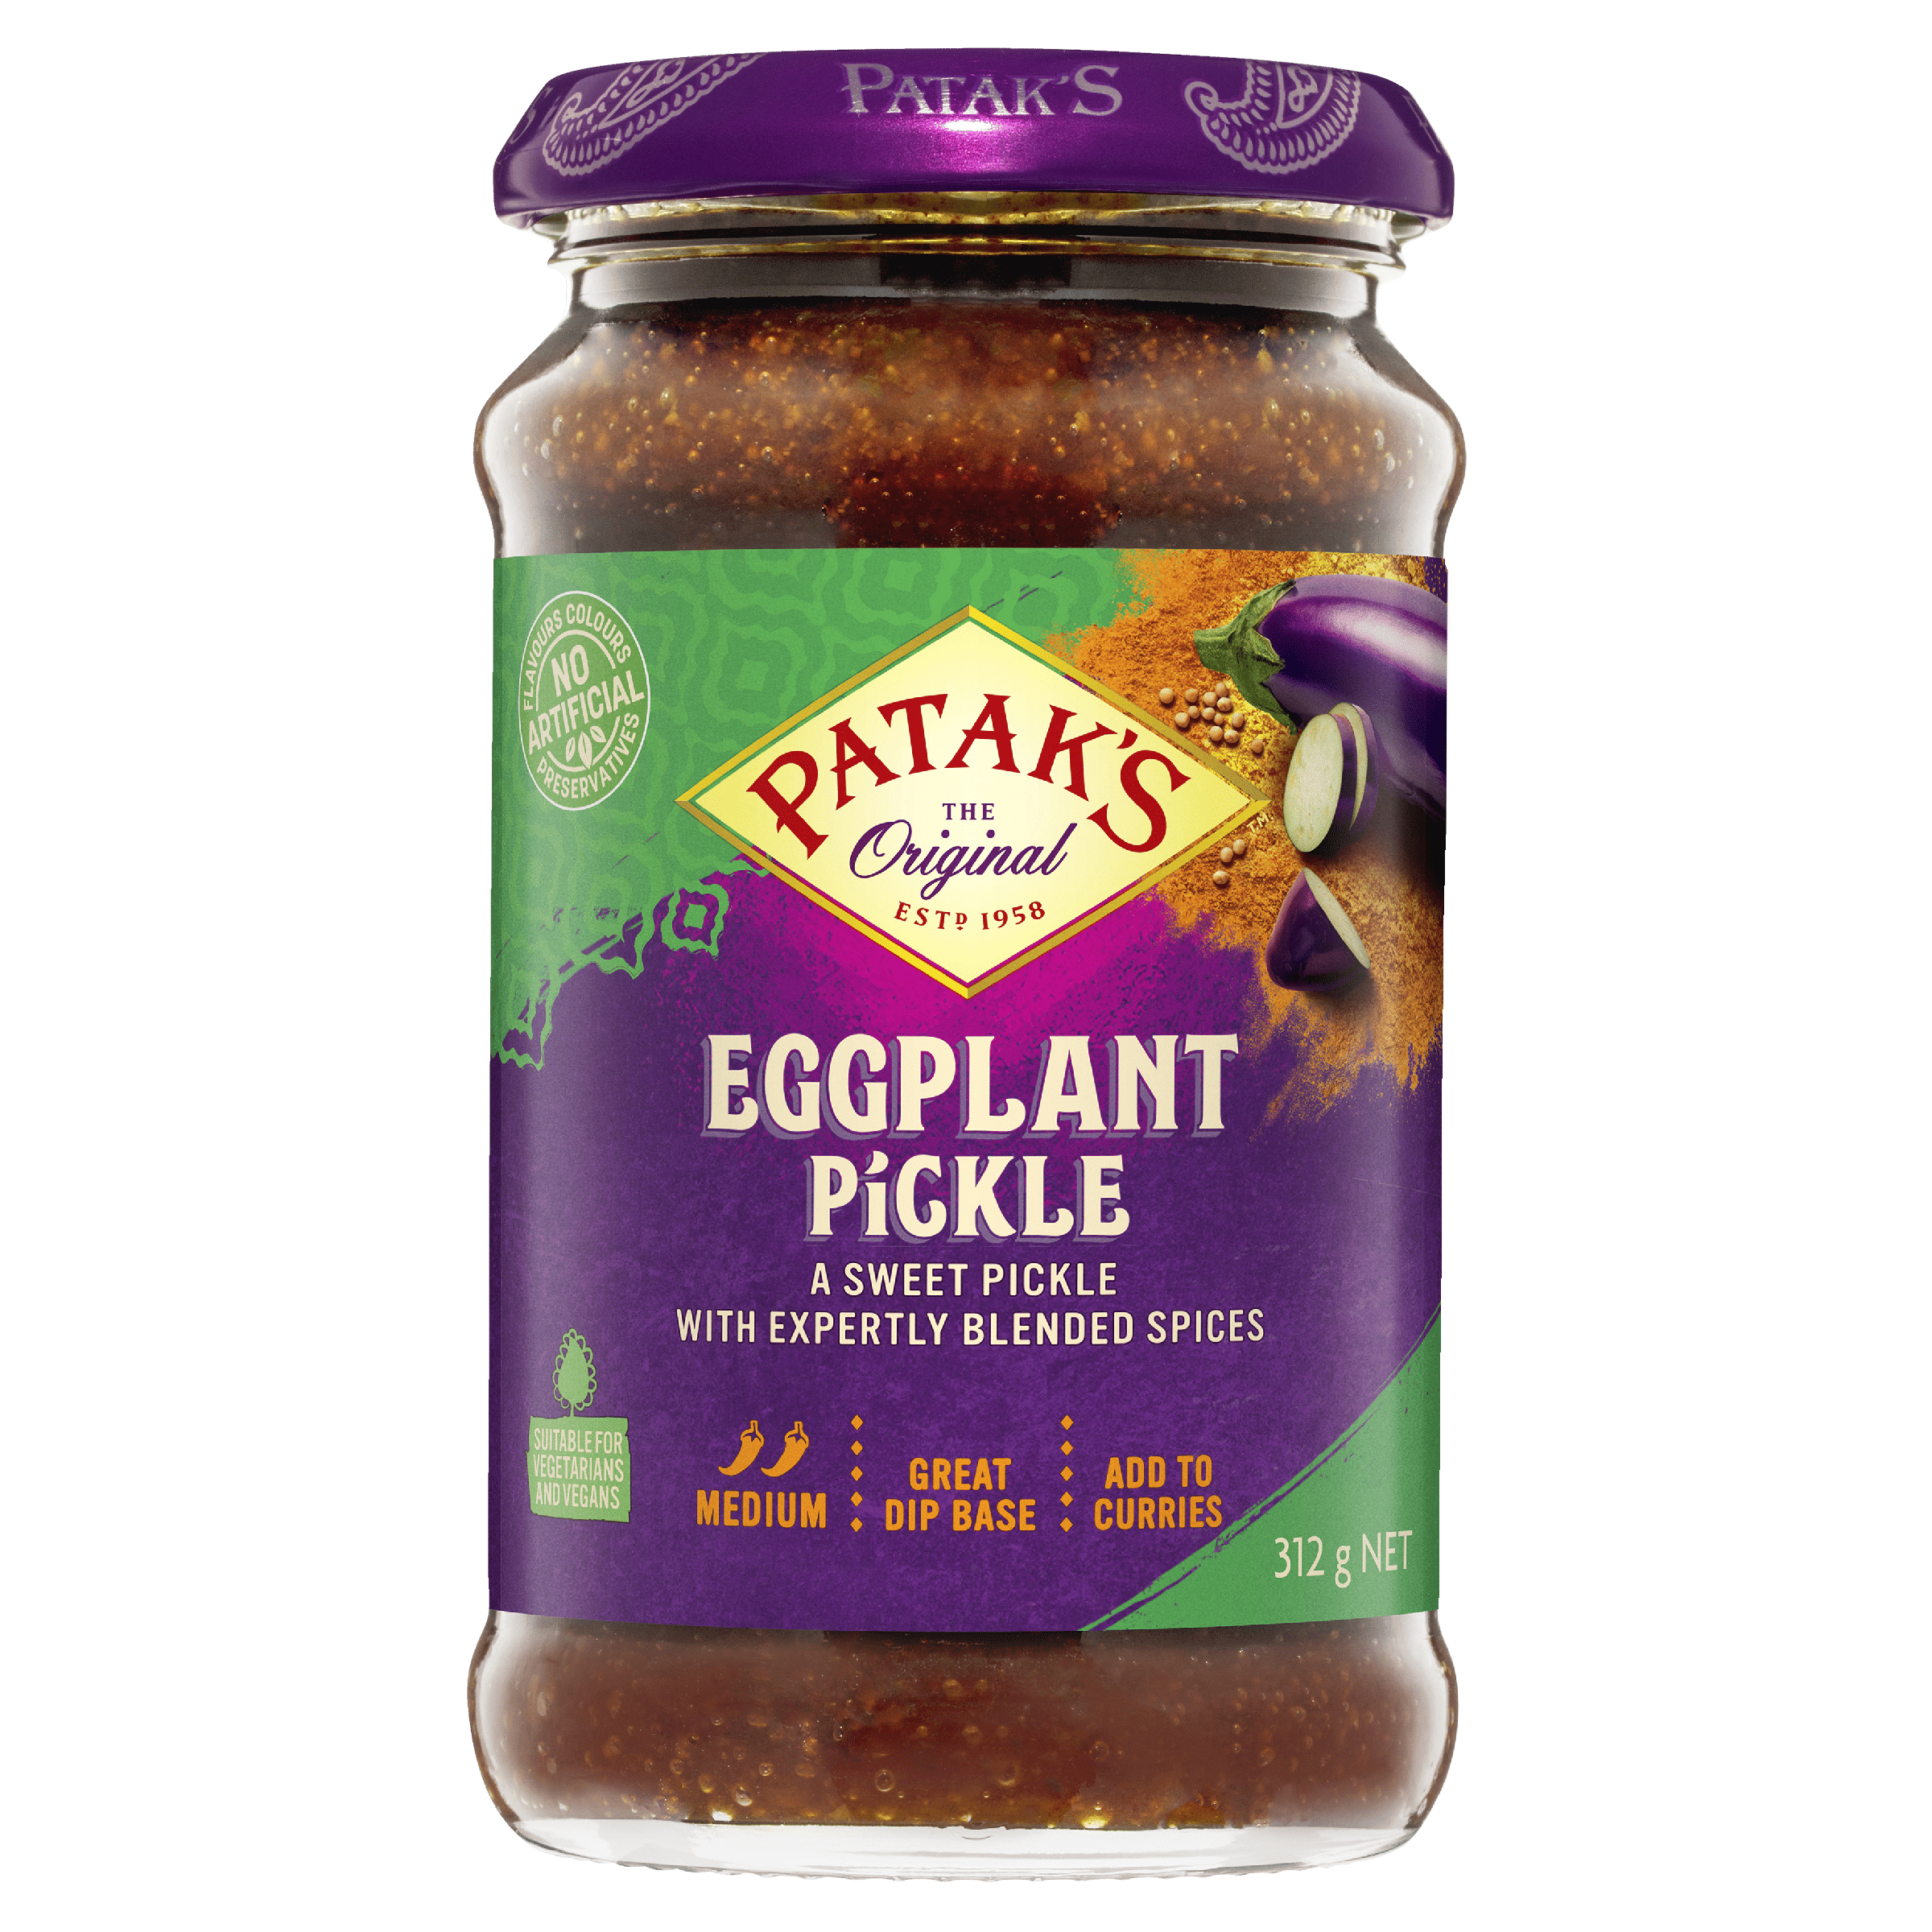 Patak’s Eggplant Pickle 312g